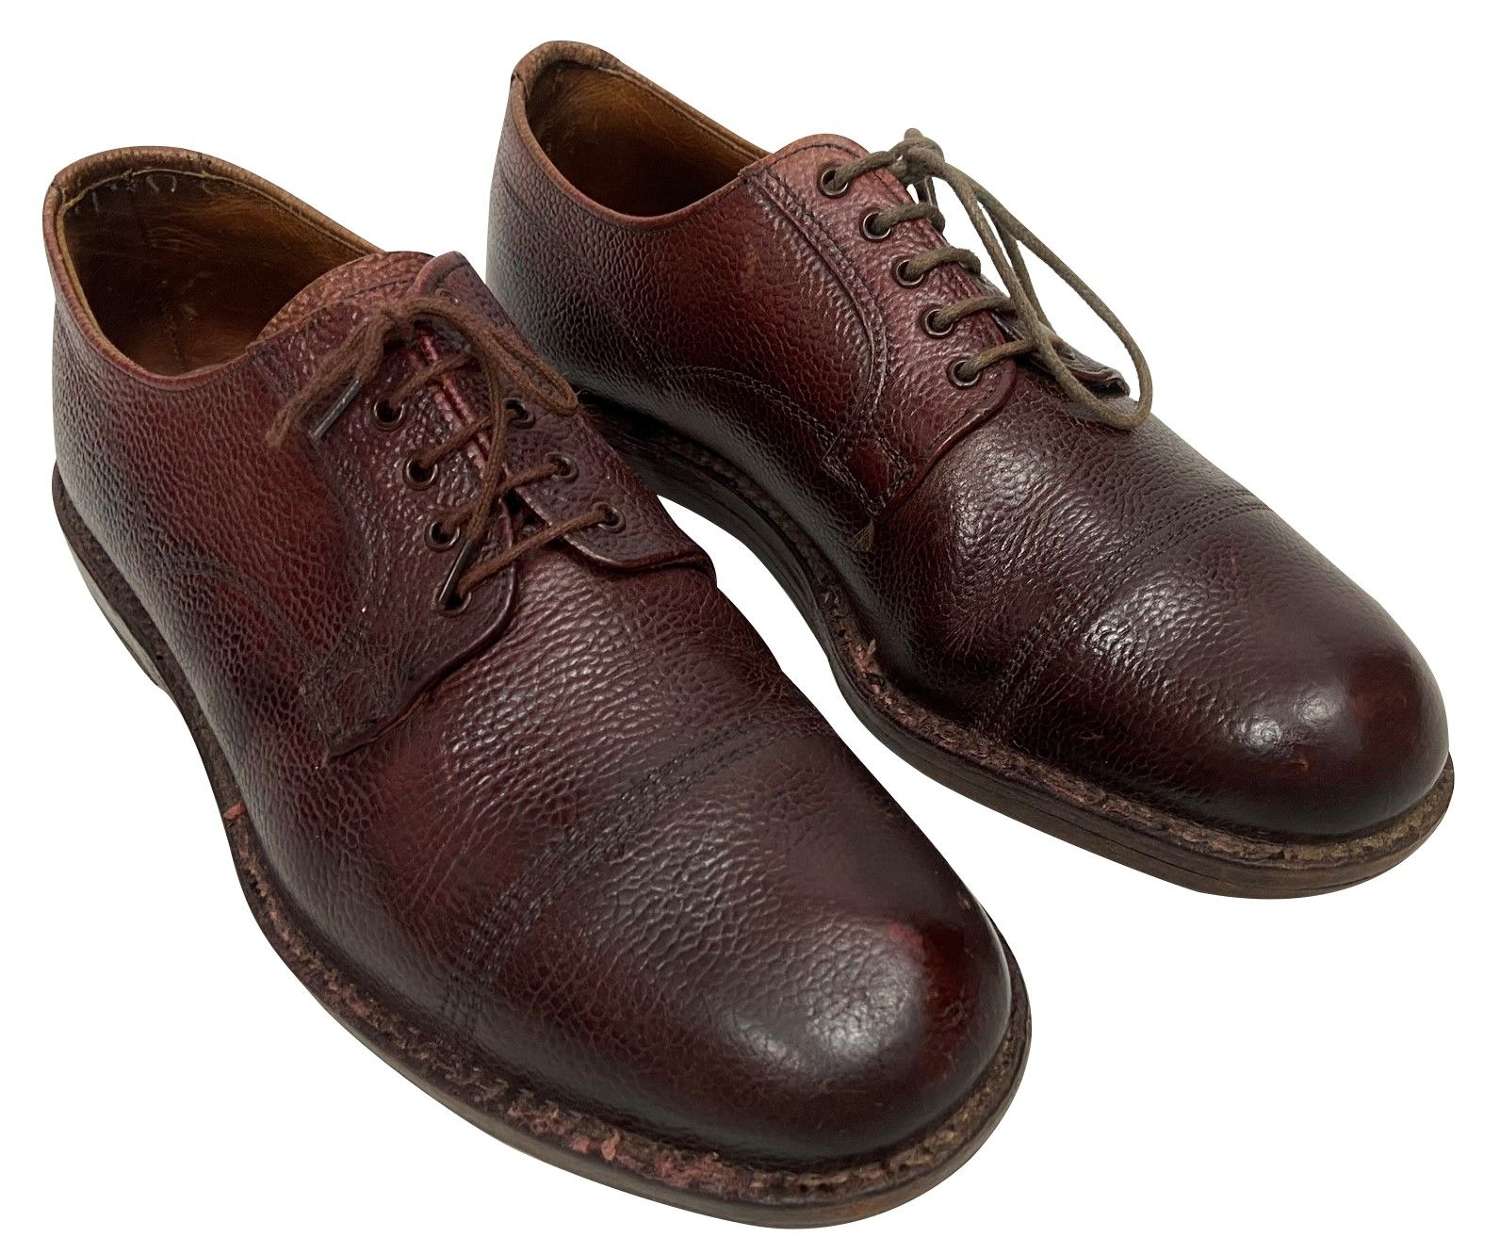 Original 1950s Men's Veldtschoen Brown Leather Shoes - Size 8